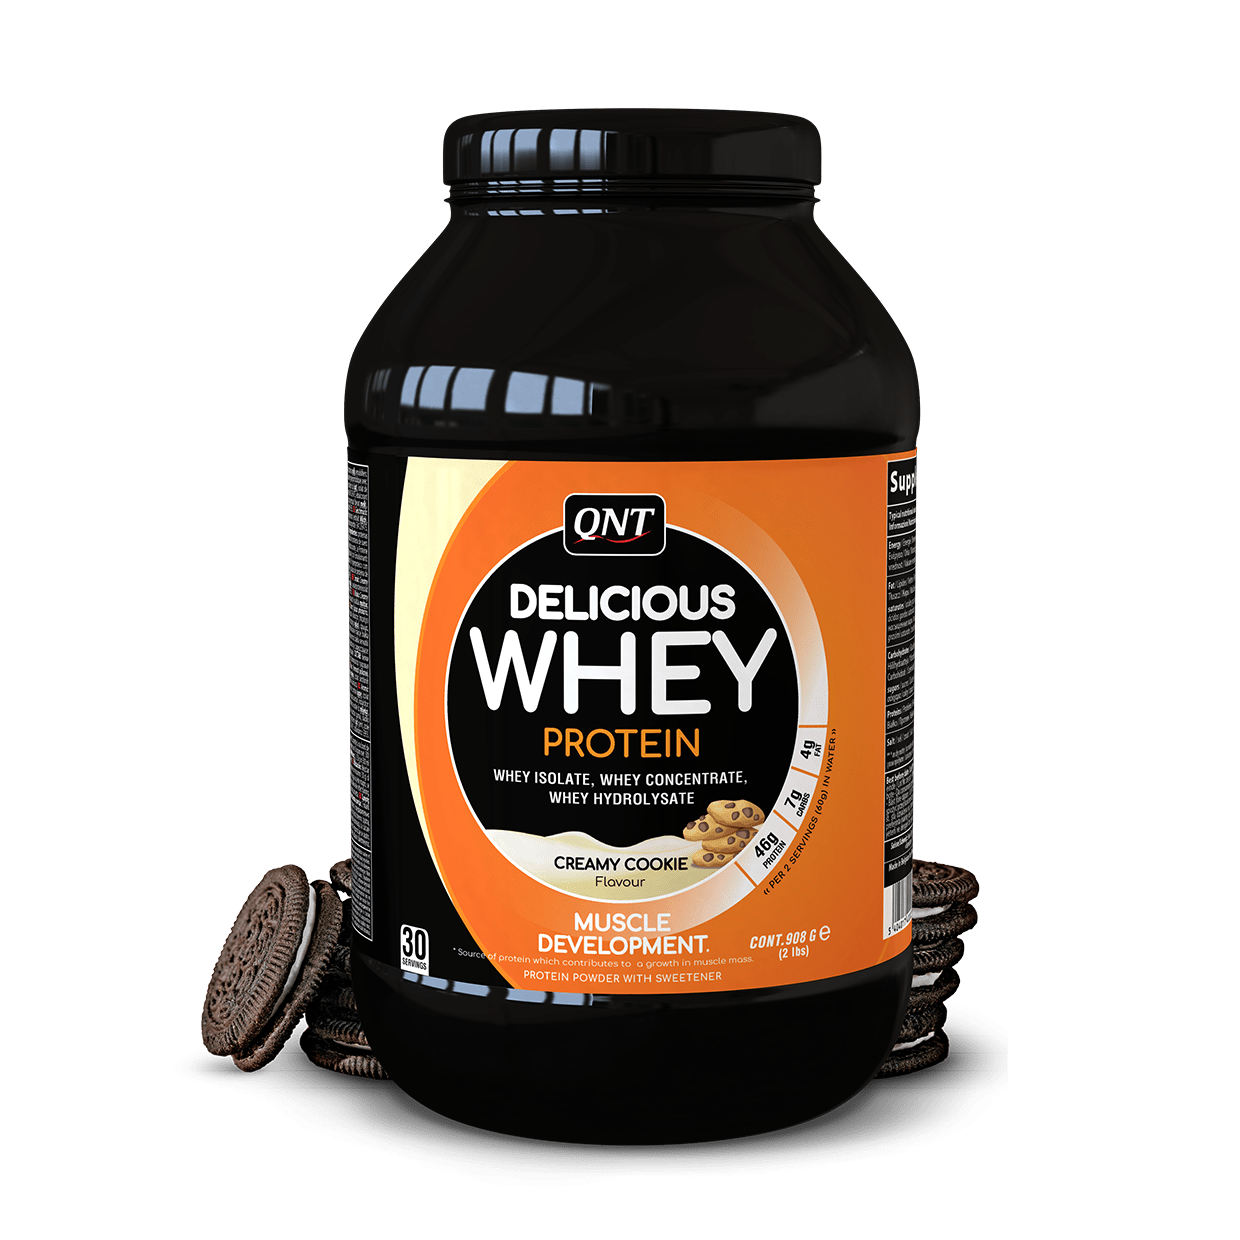 Сывороточный протеин изолят QNT Delicious Whey protein (908 г)кюнт  cookies & cream,  ml, QNT. Whey Isolate. Lean muscle mass Weight Loss स्वास्थ्य लाभ Anti-catabolic properties 